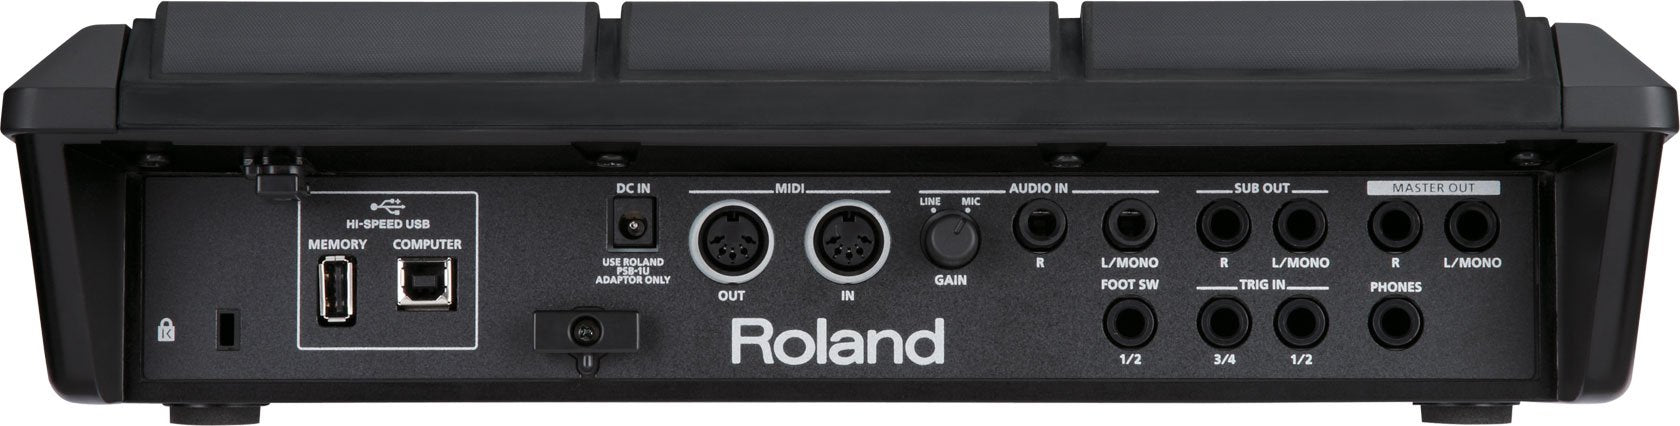 Roland sampling pad SPD-SX Multicolor Black MIDI Controller USB LED Indicator_3